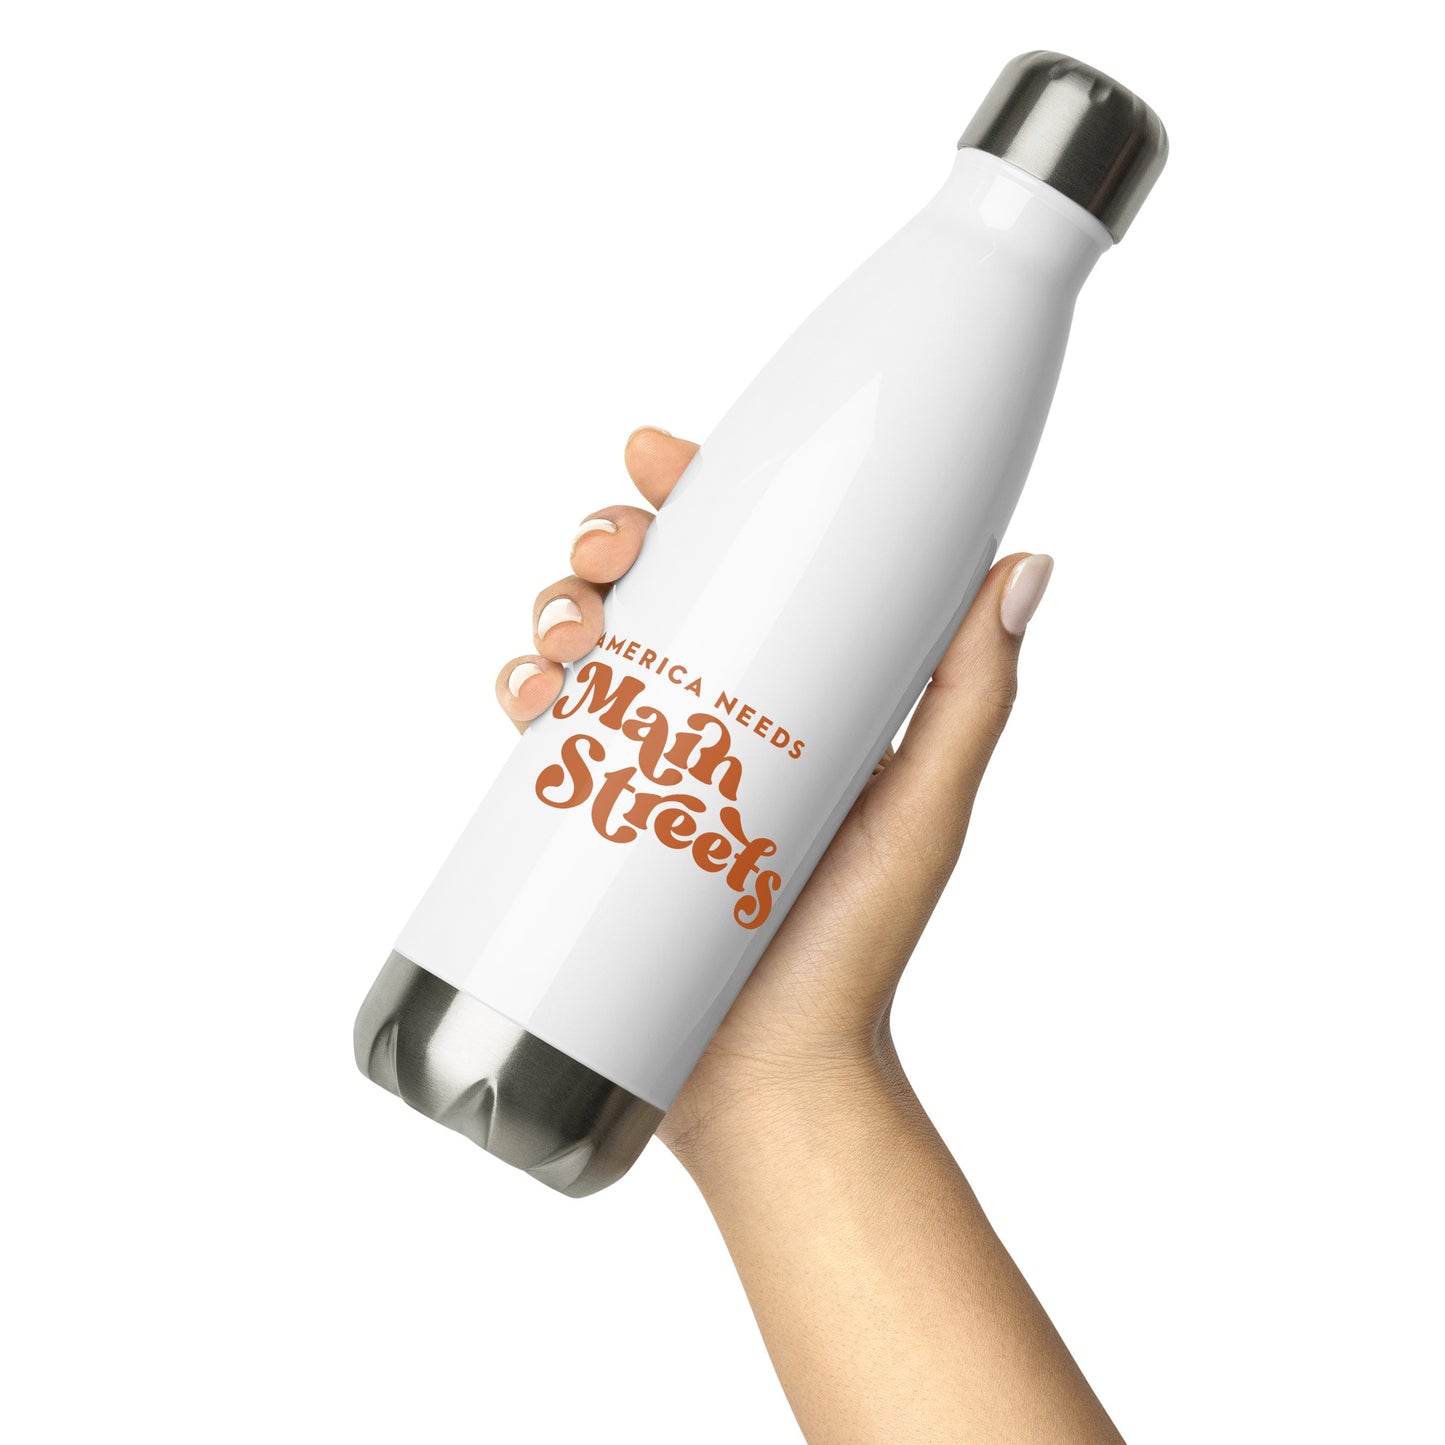 "America Needs Main Streets" White & Orange Stainless Steel Water Bottle